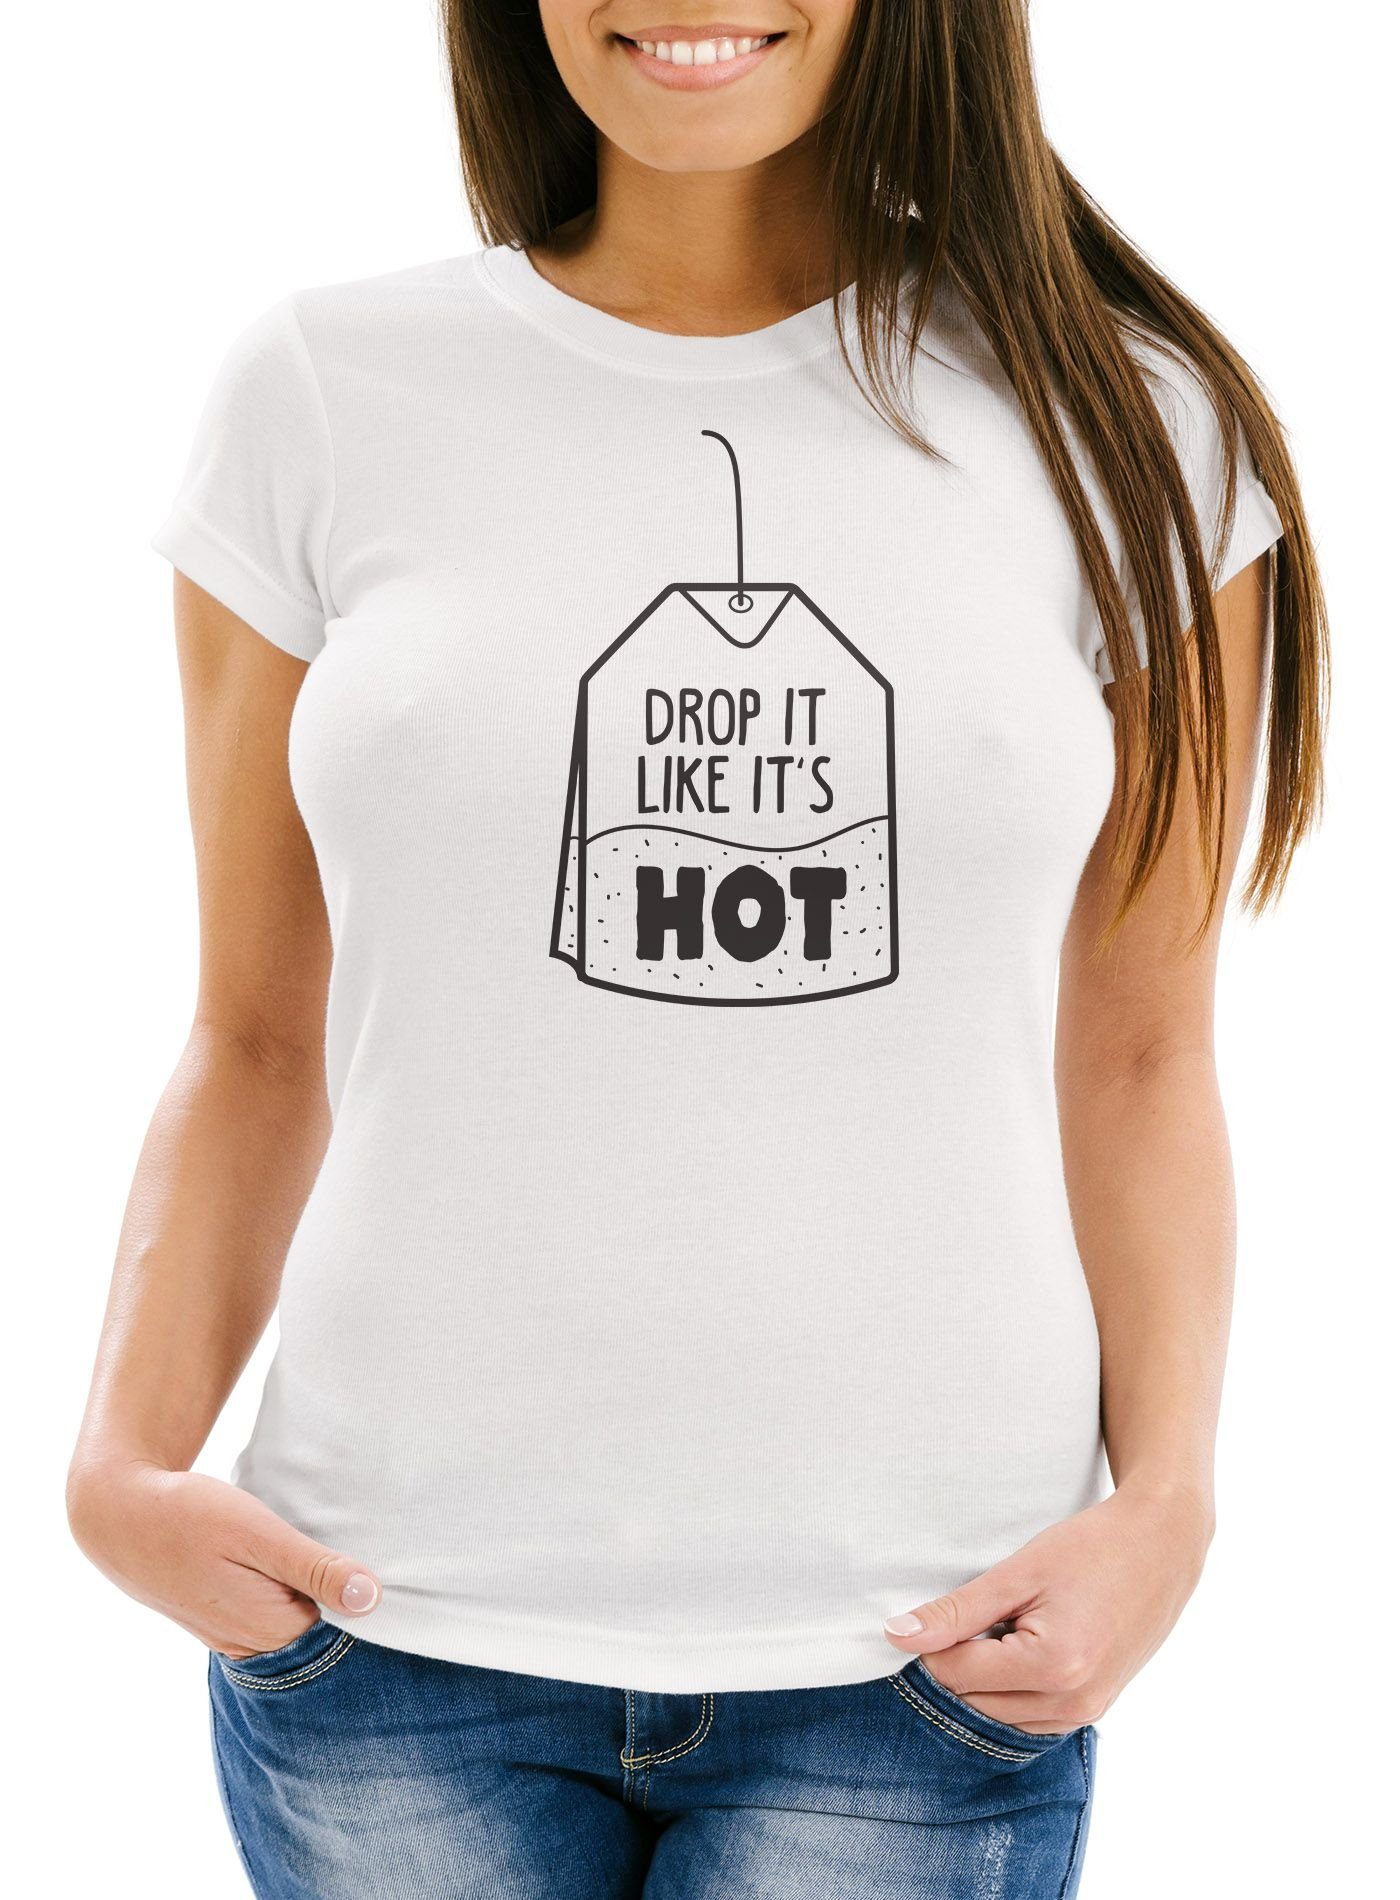 MoonWorks Print-Shirt Damen T-Shirt Spruch Drop it like it's hot Slim Fit Moonworks® mit Print